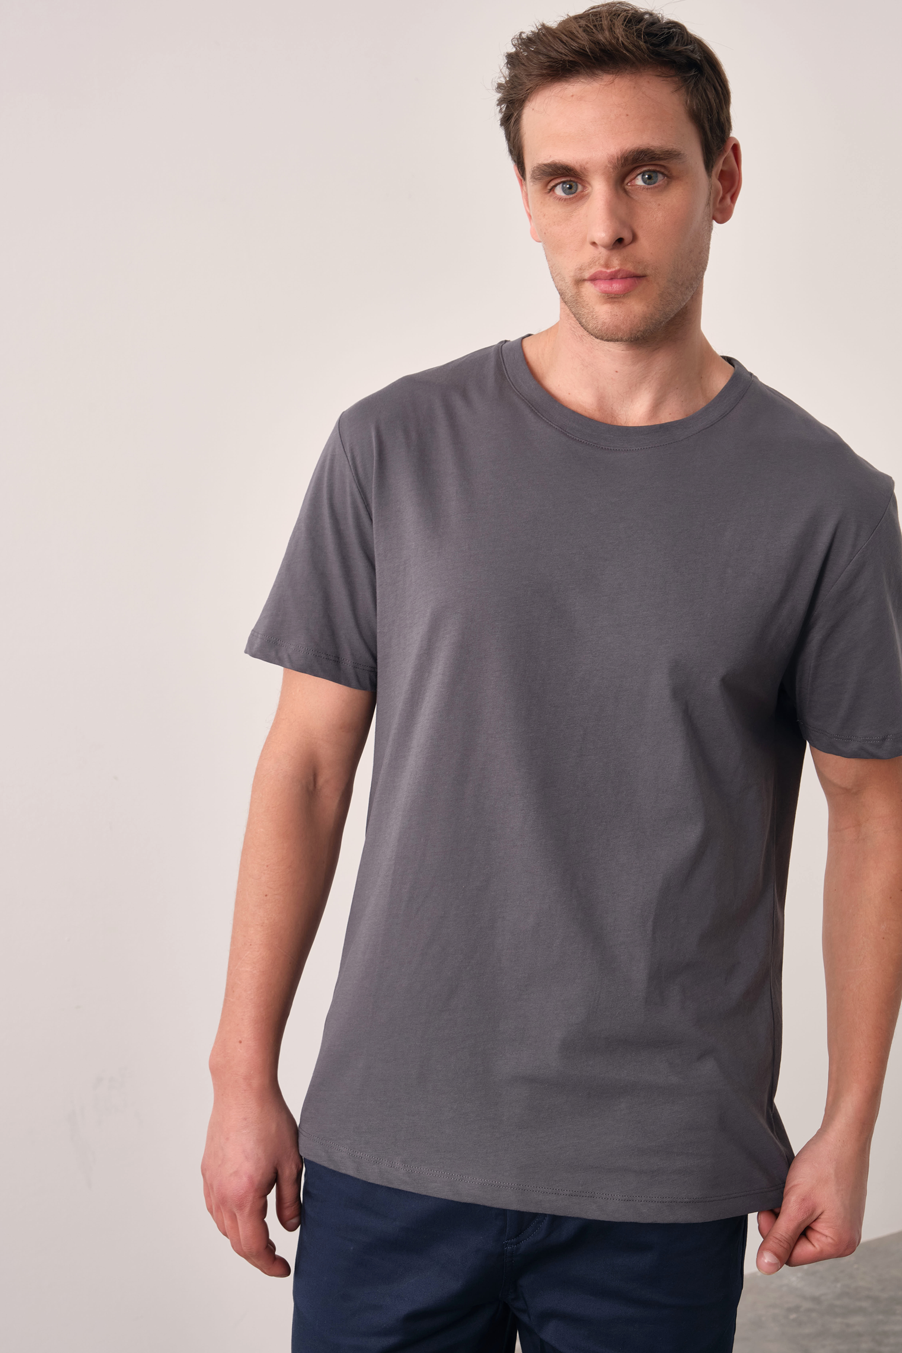 &quot;All-American&quot; Unisex T-shirt in Crispy Cotton